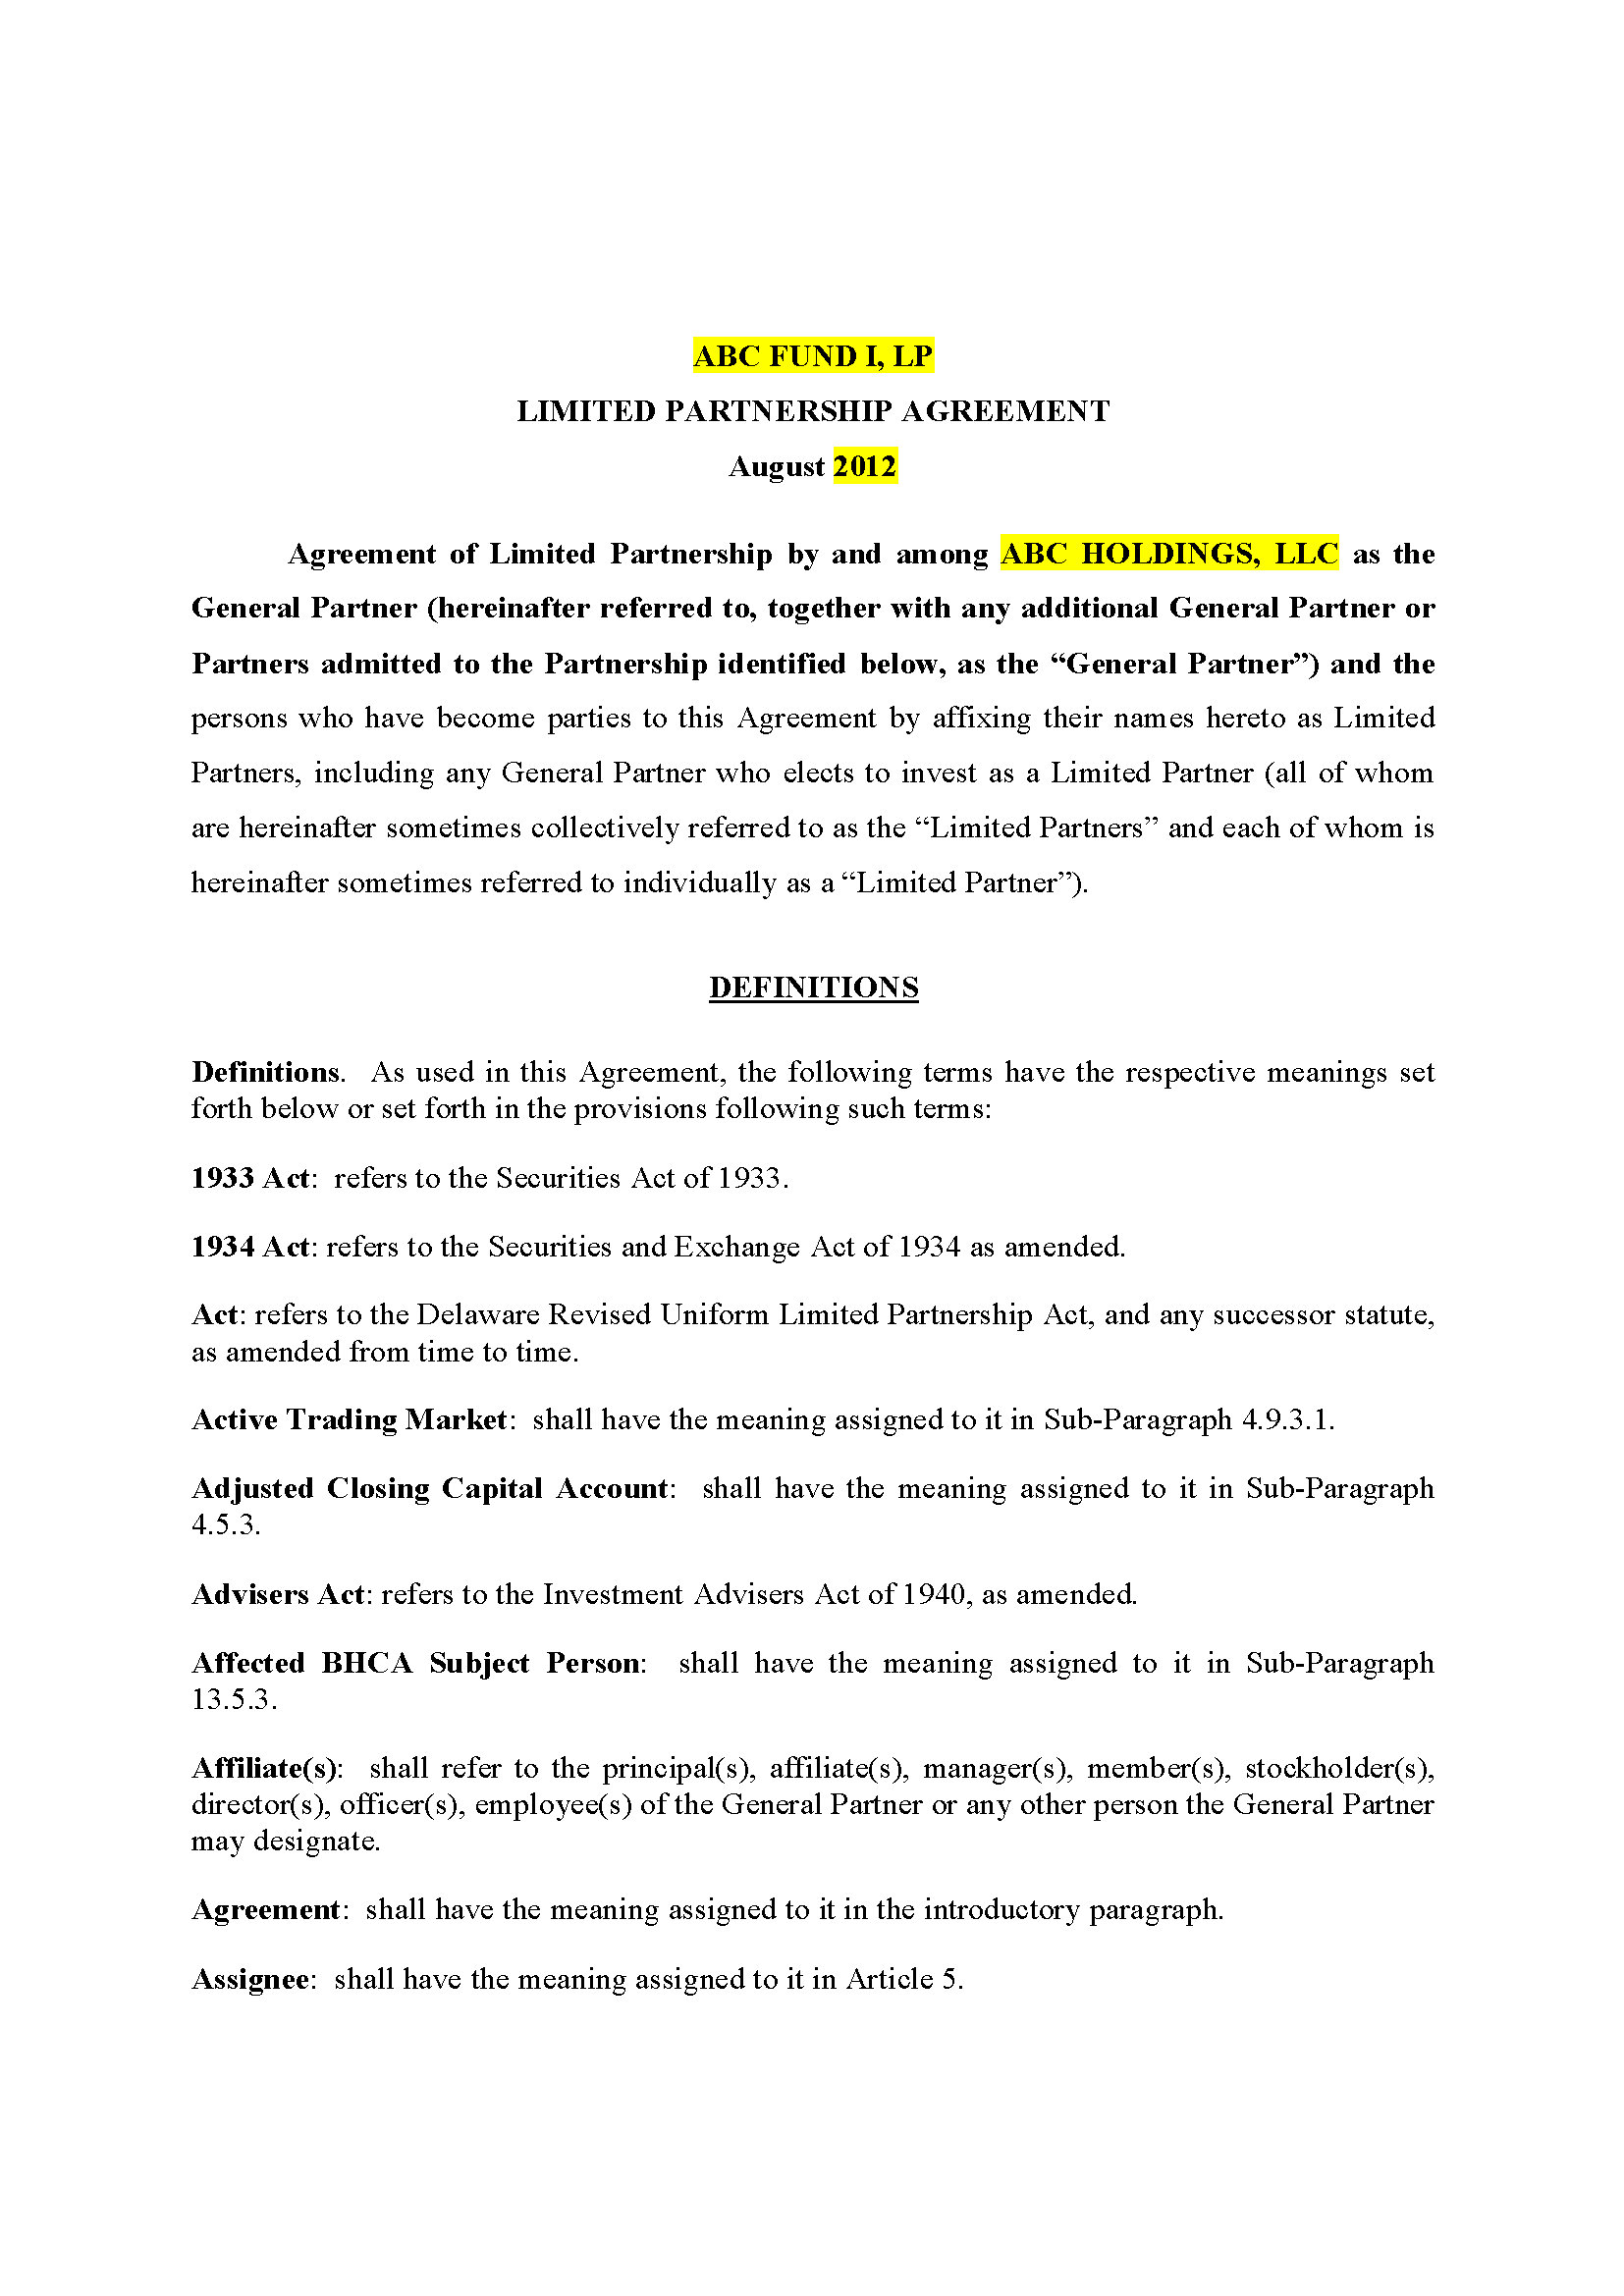 Florida Limted Partnership Agreement (45 pg)Private Placement Memorandum